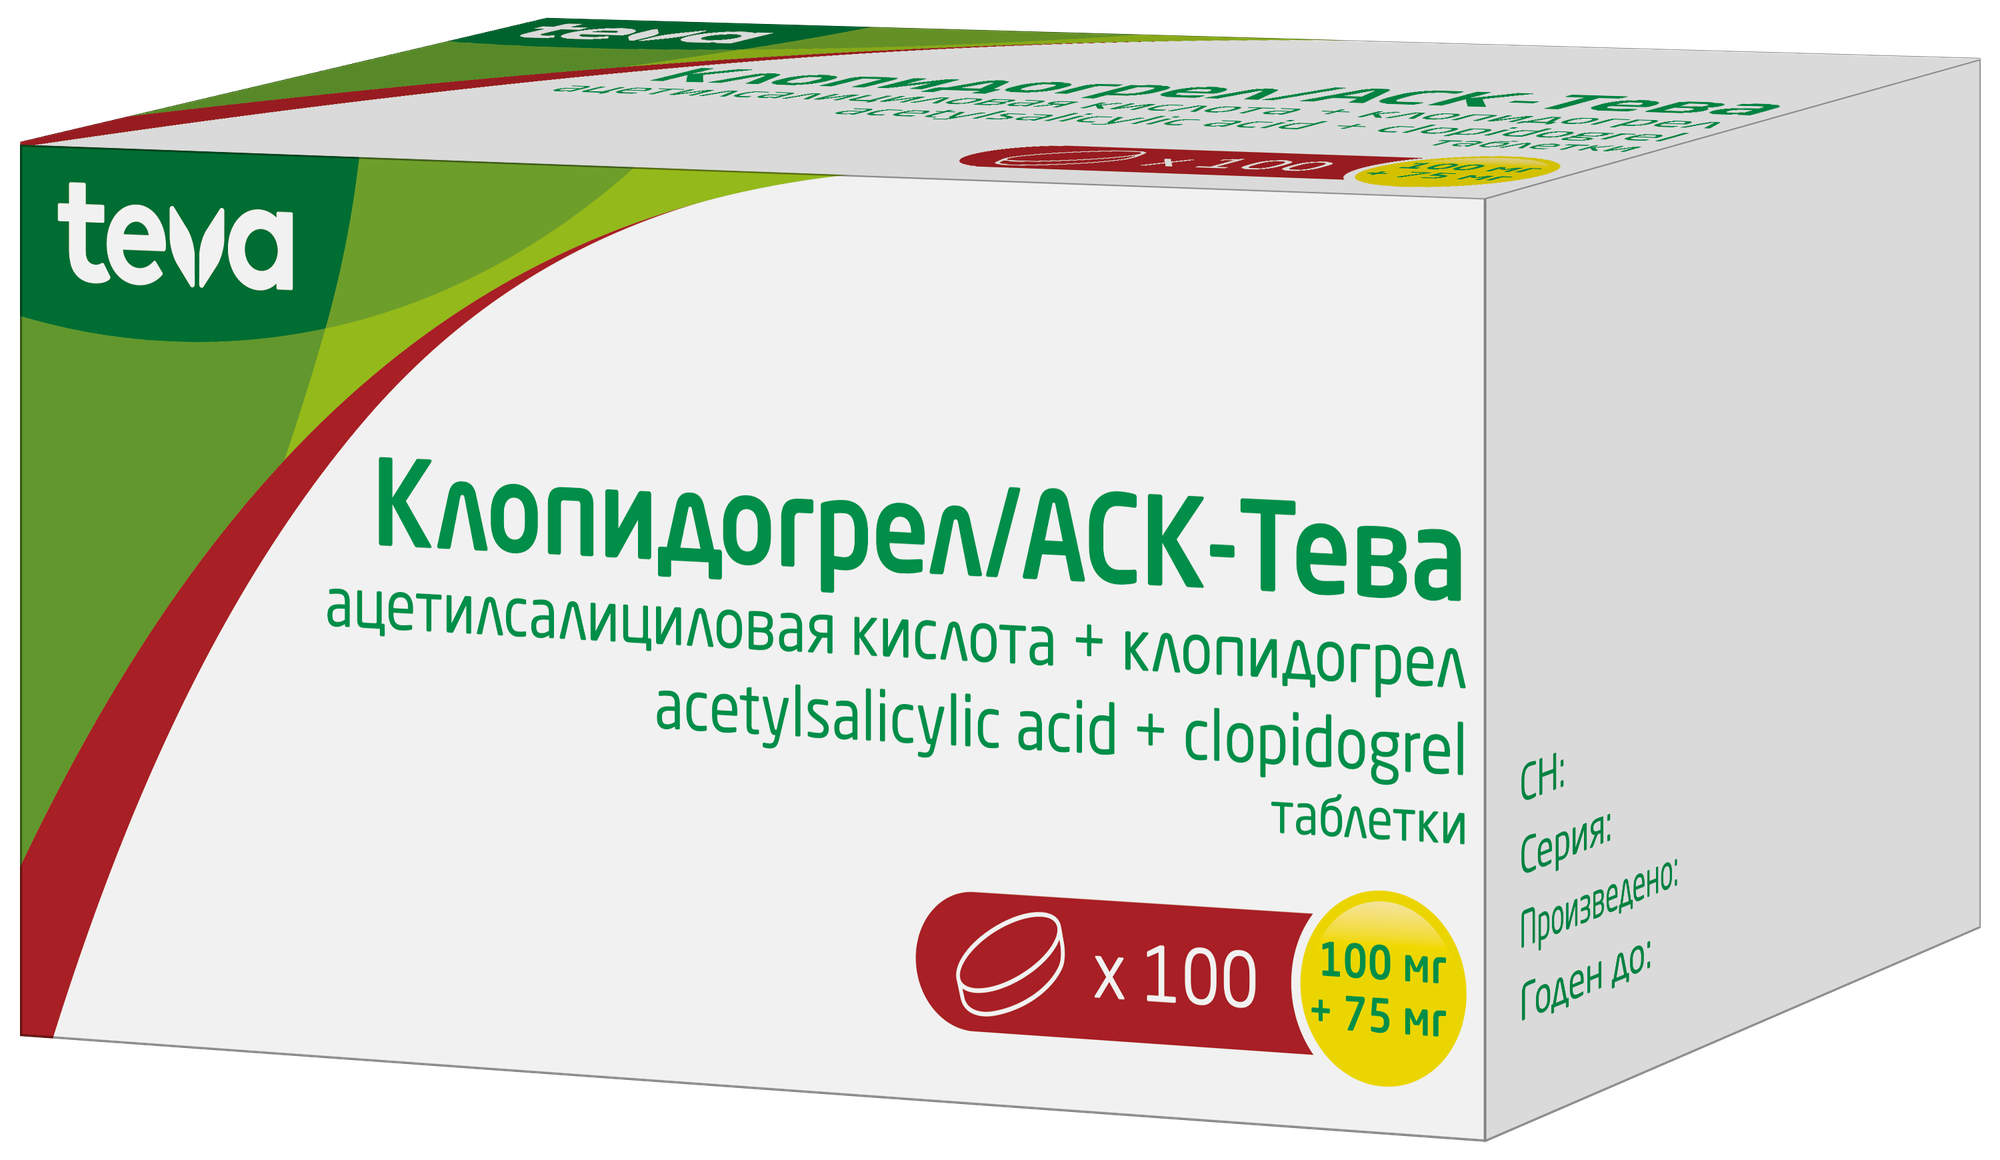 Клопидогрел/АСК-Тева таб., 100 мг+75 мг, 100 шт.